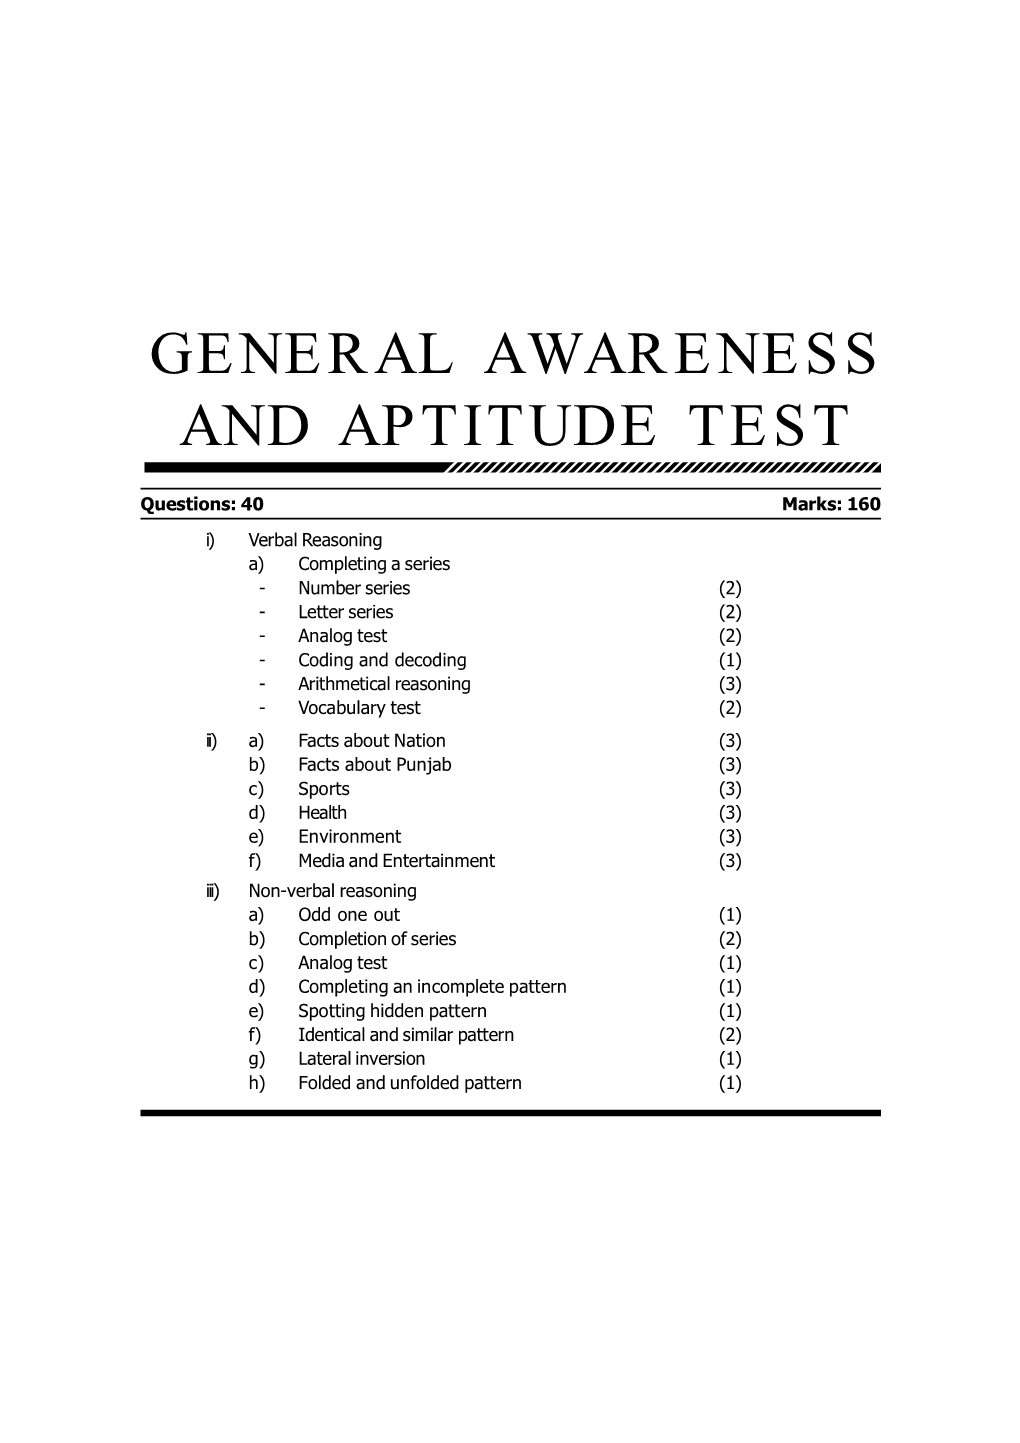 General Awareness and Aptitude Test